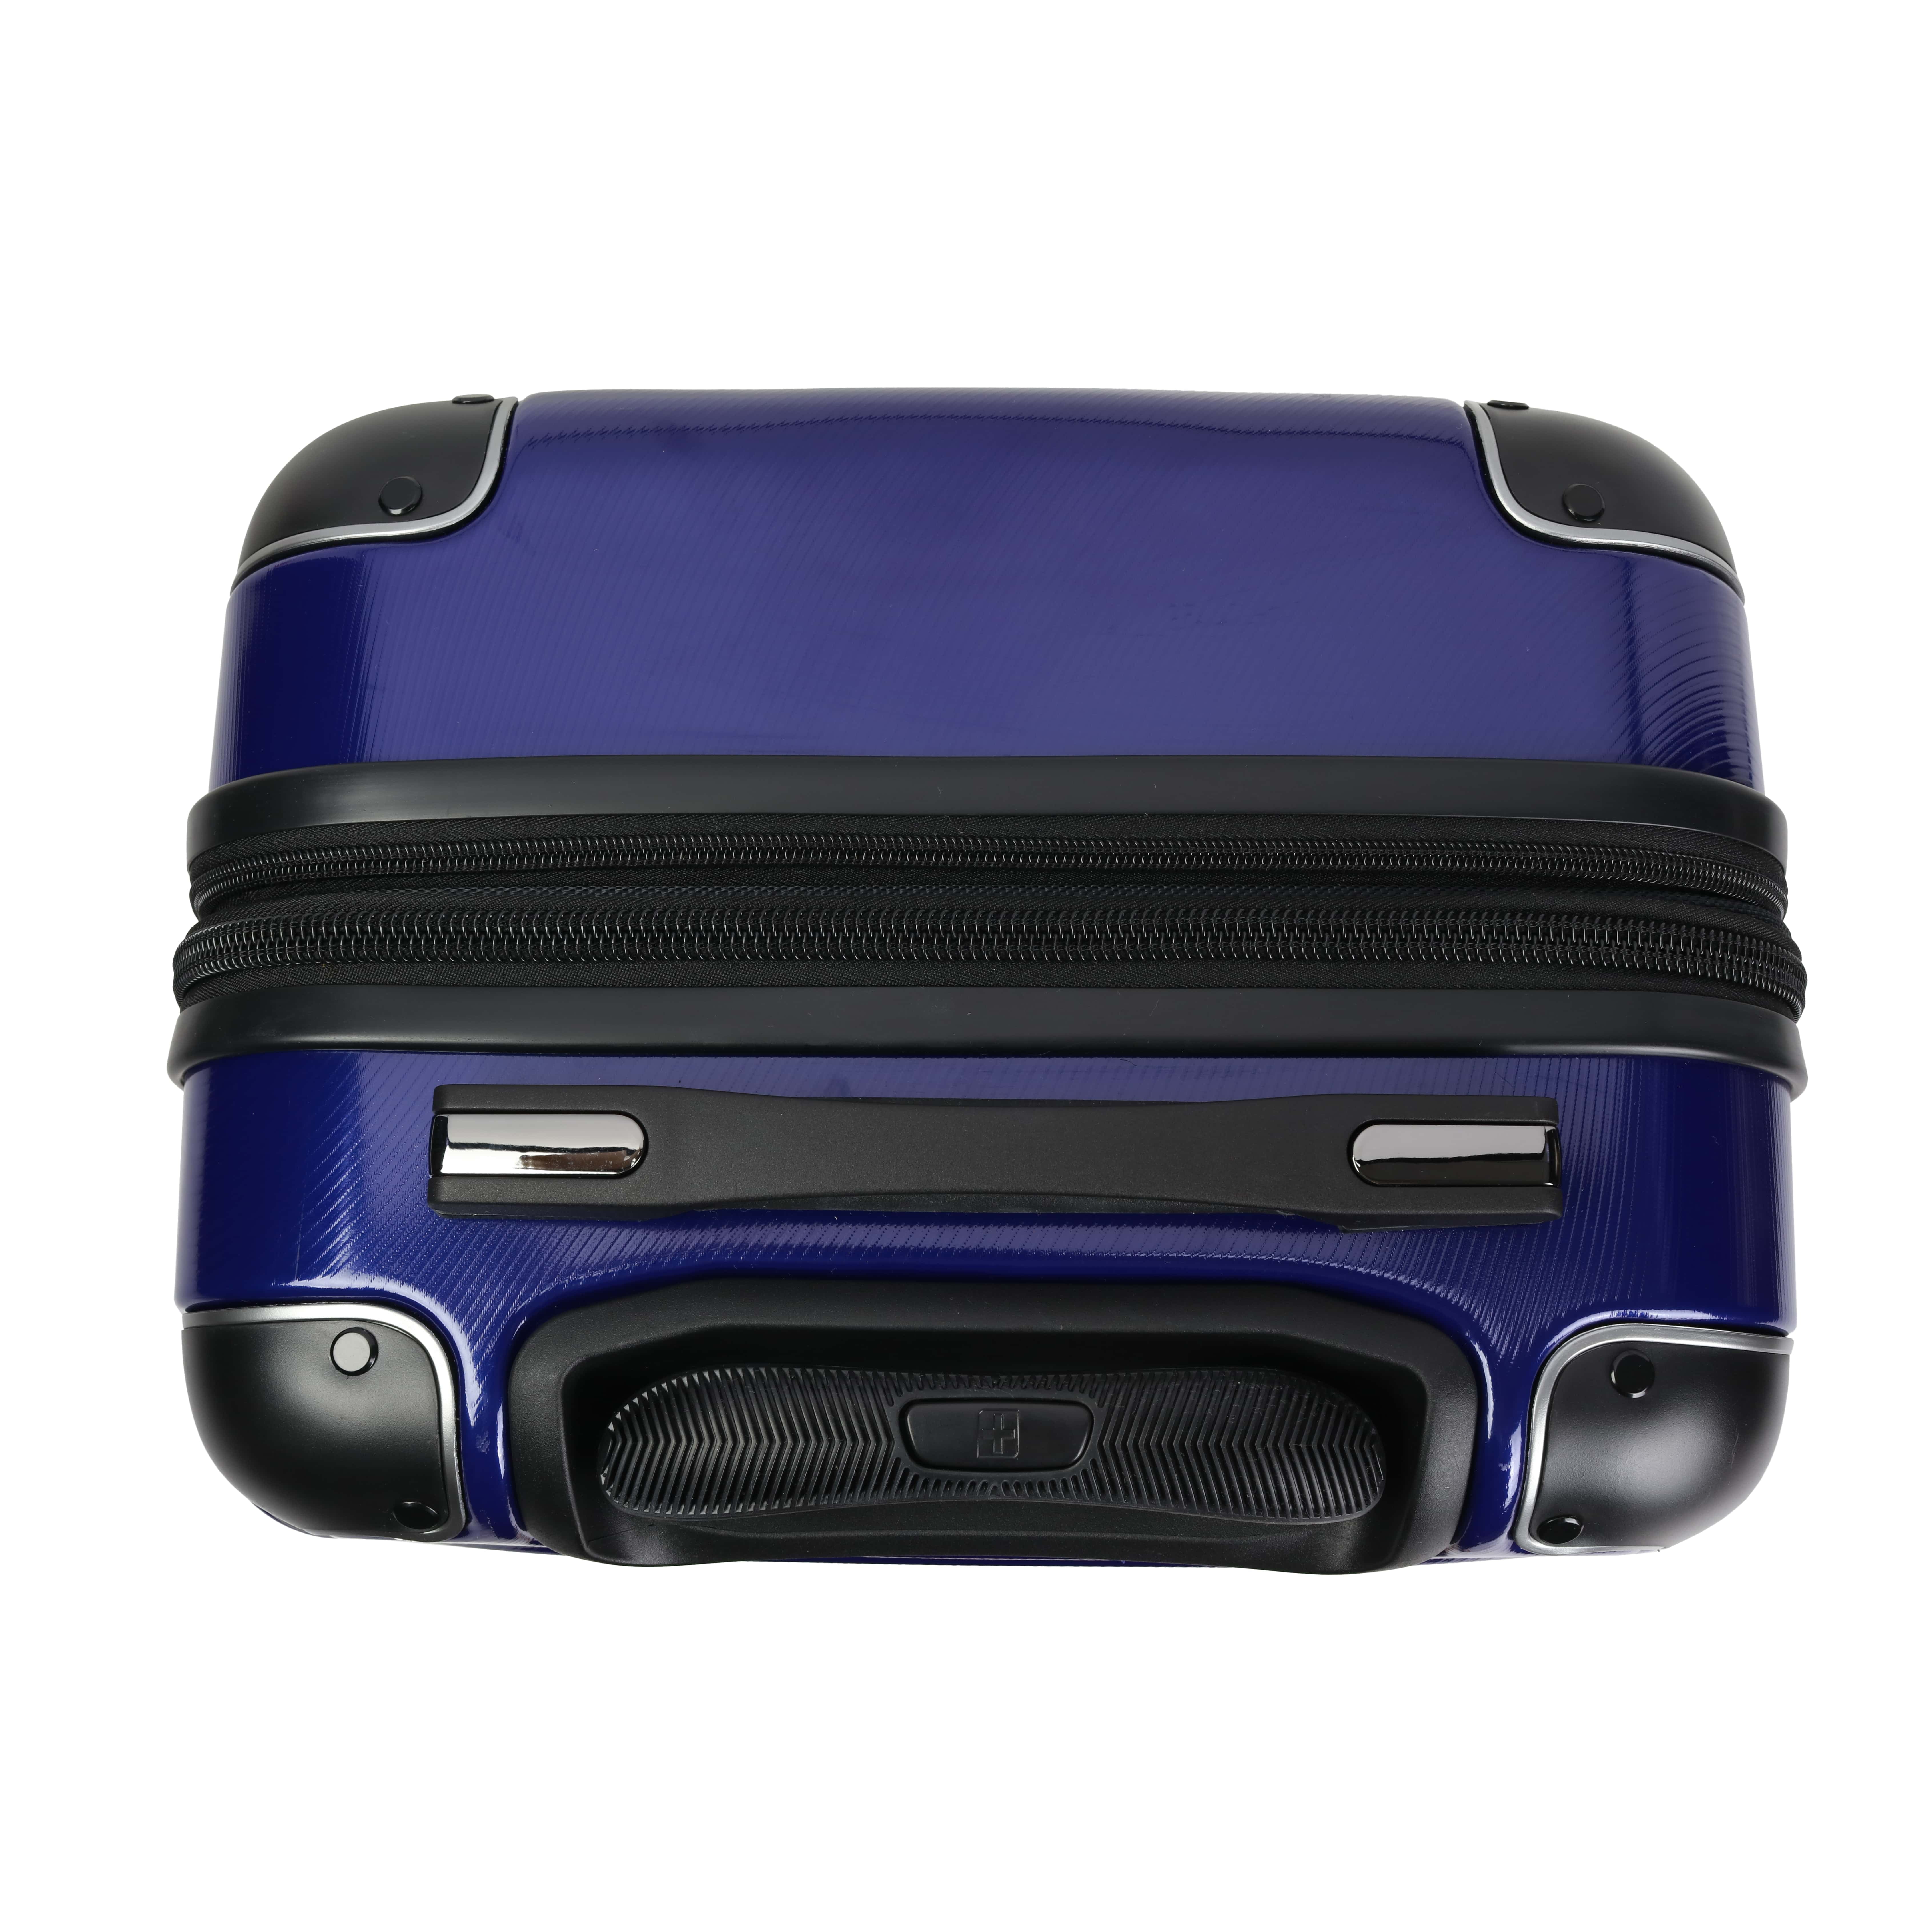 Swisstech 21 Hardside Carry-on Upright Luggage, Blue 